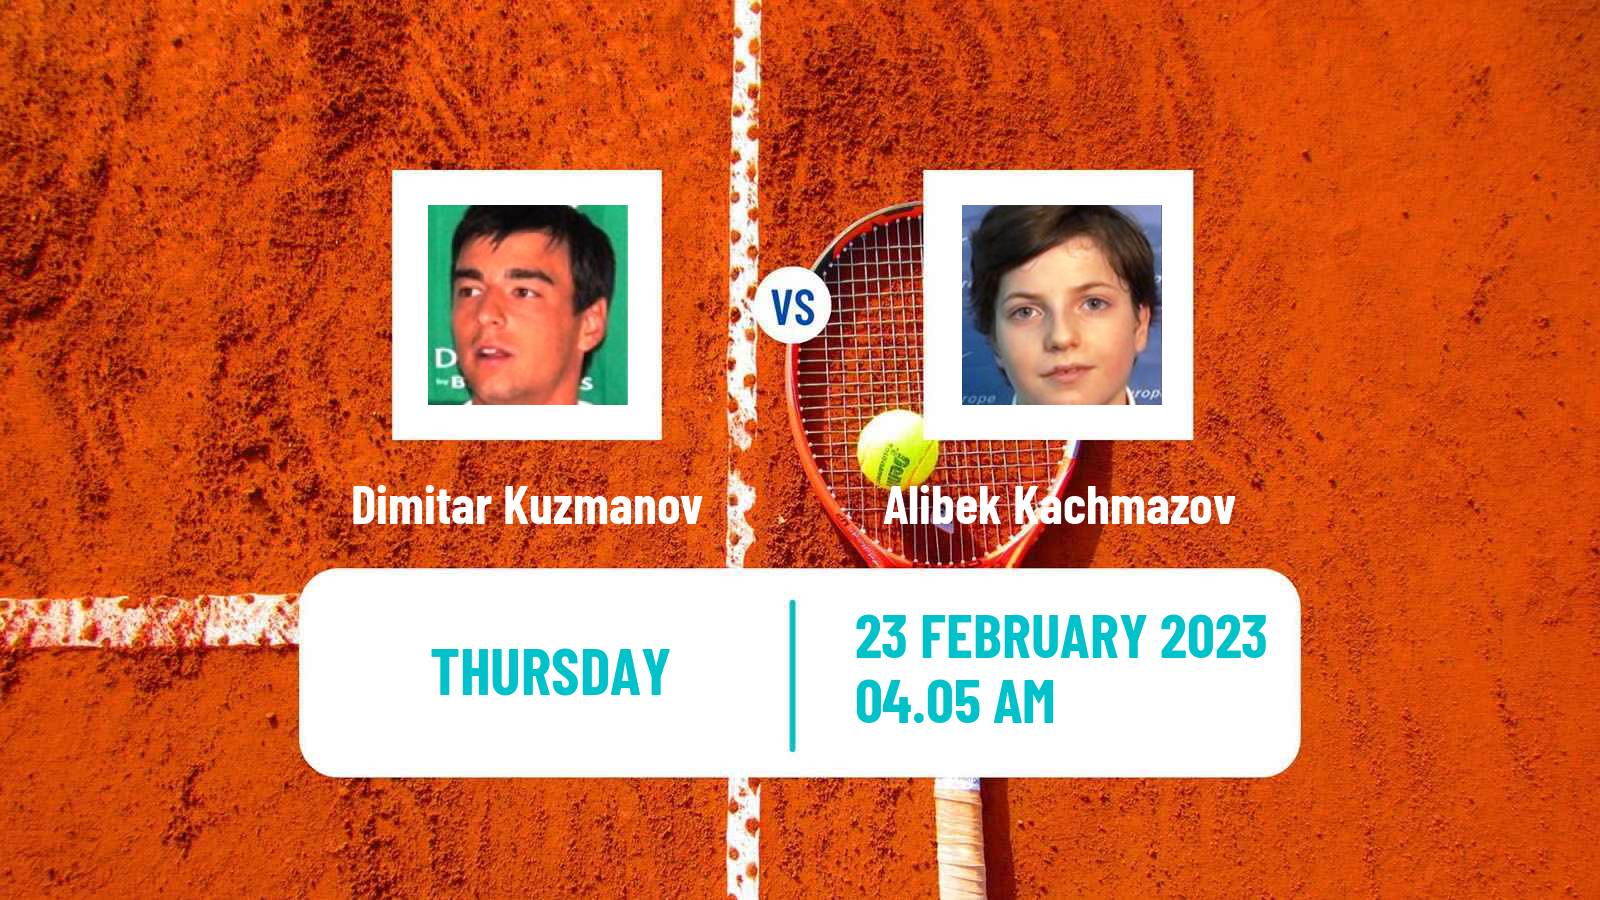 Tennis ATP Challenger Dimitar Kuzmanov - Alibek Kachmazov